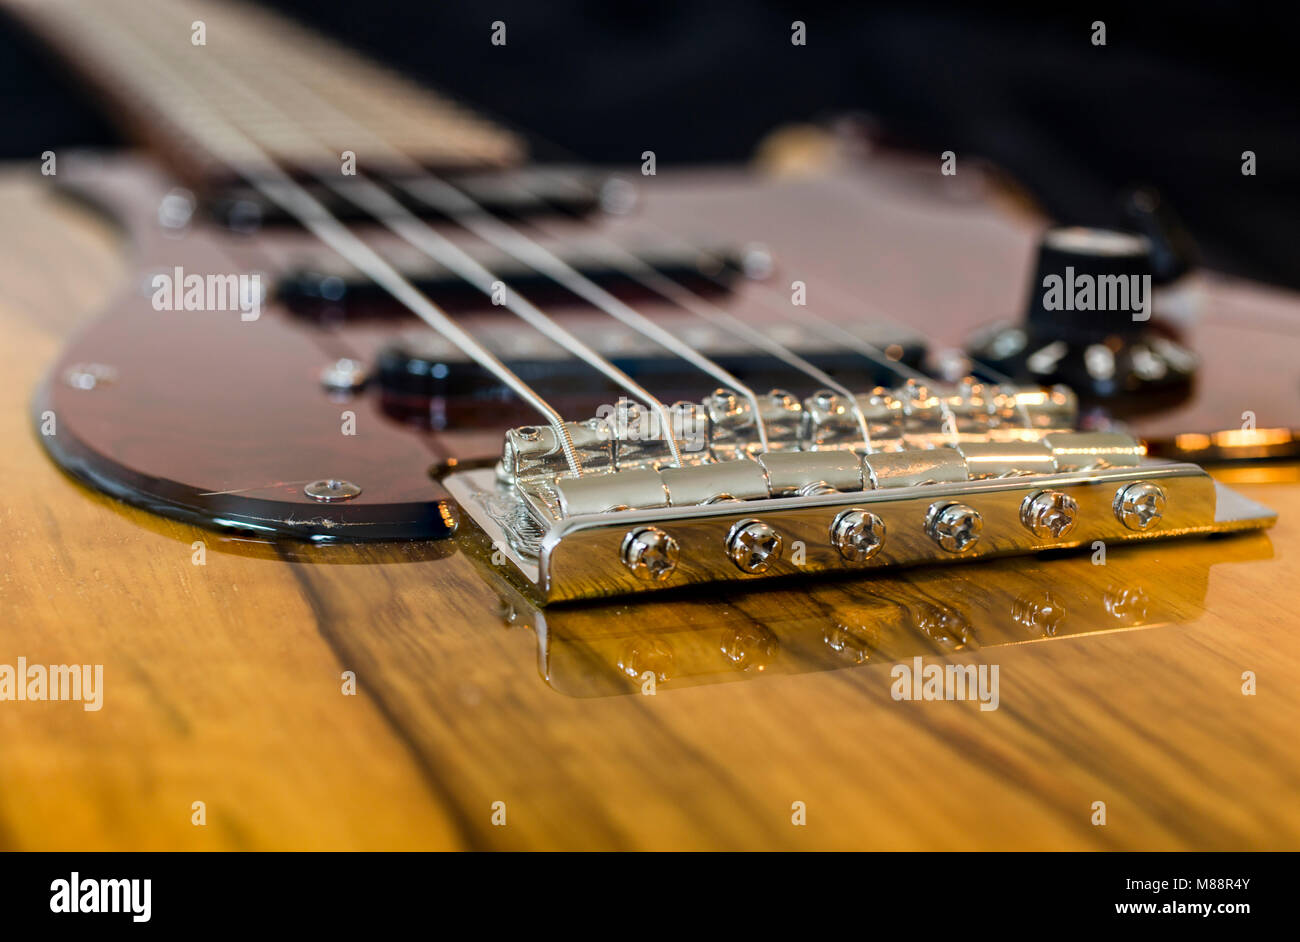 Beautiful custom electro guitar Stock Photo